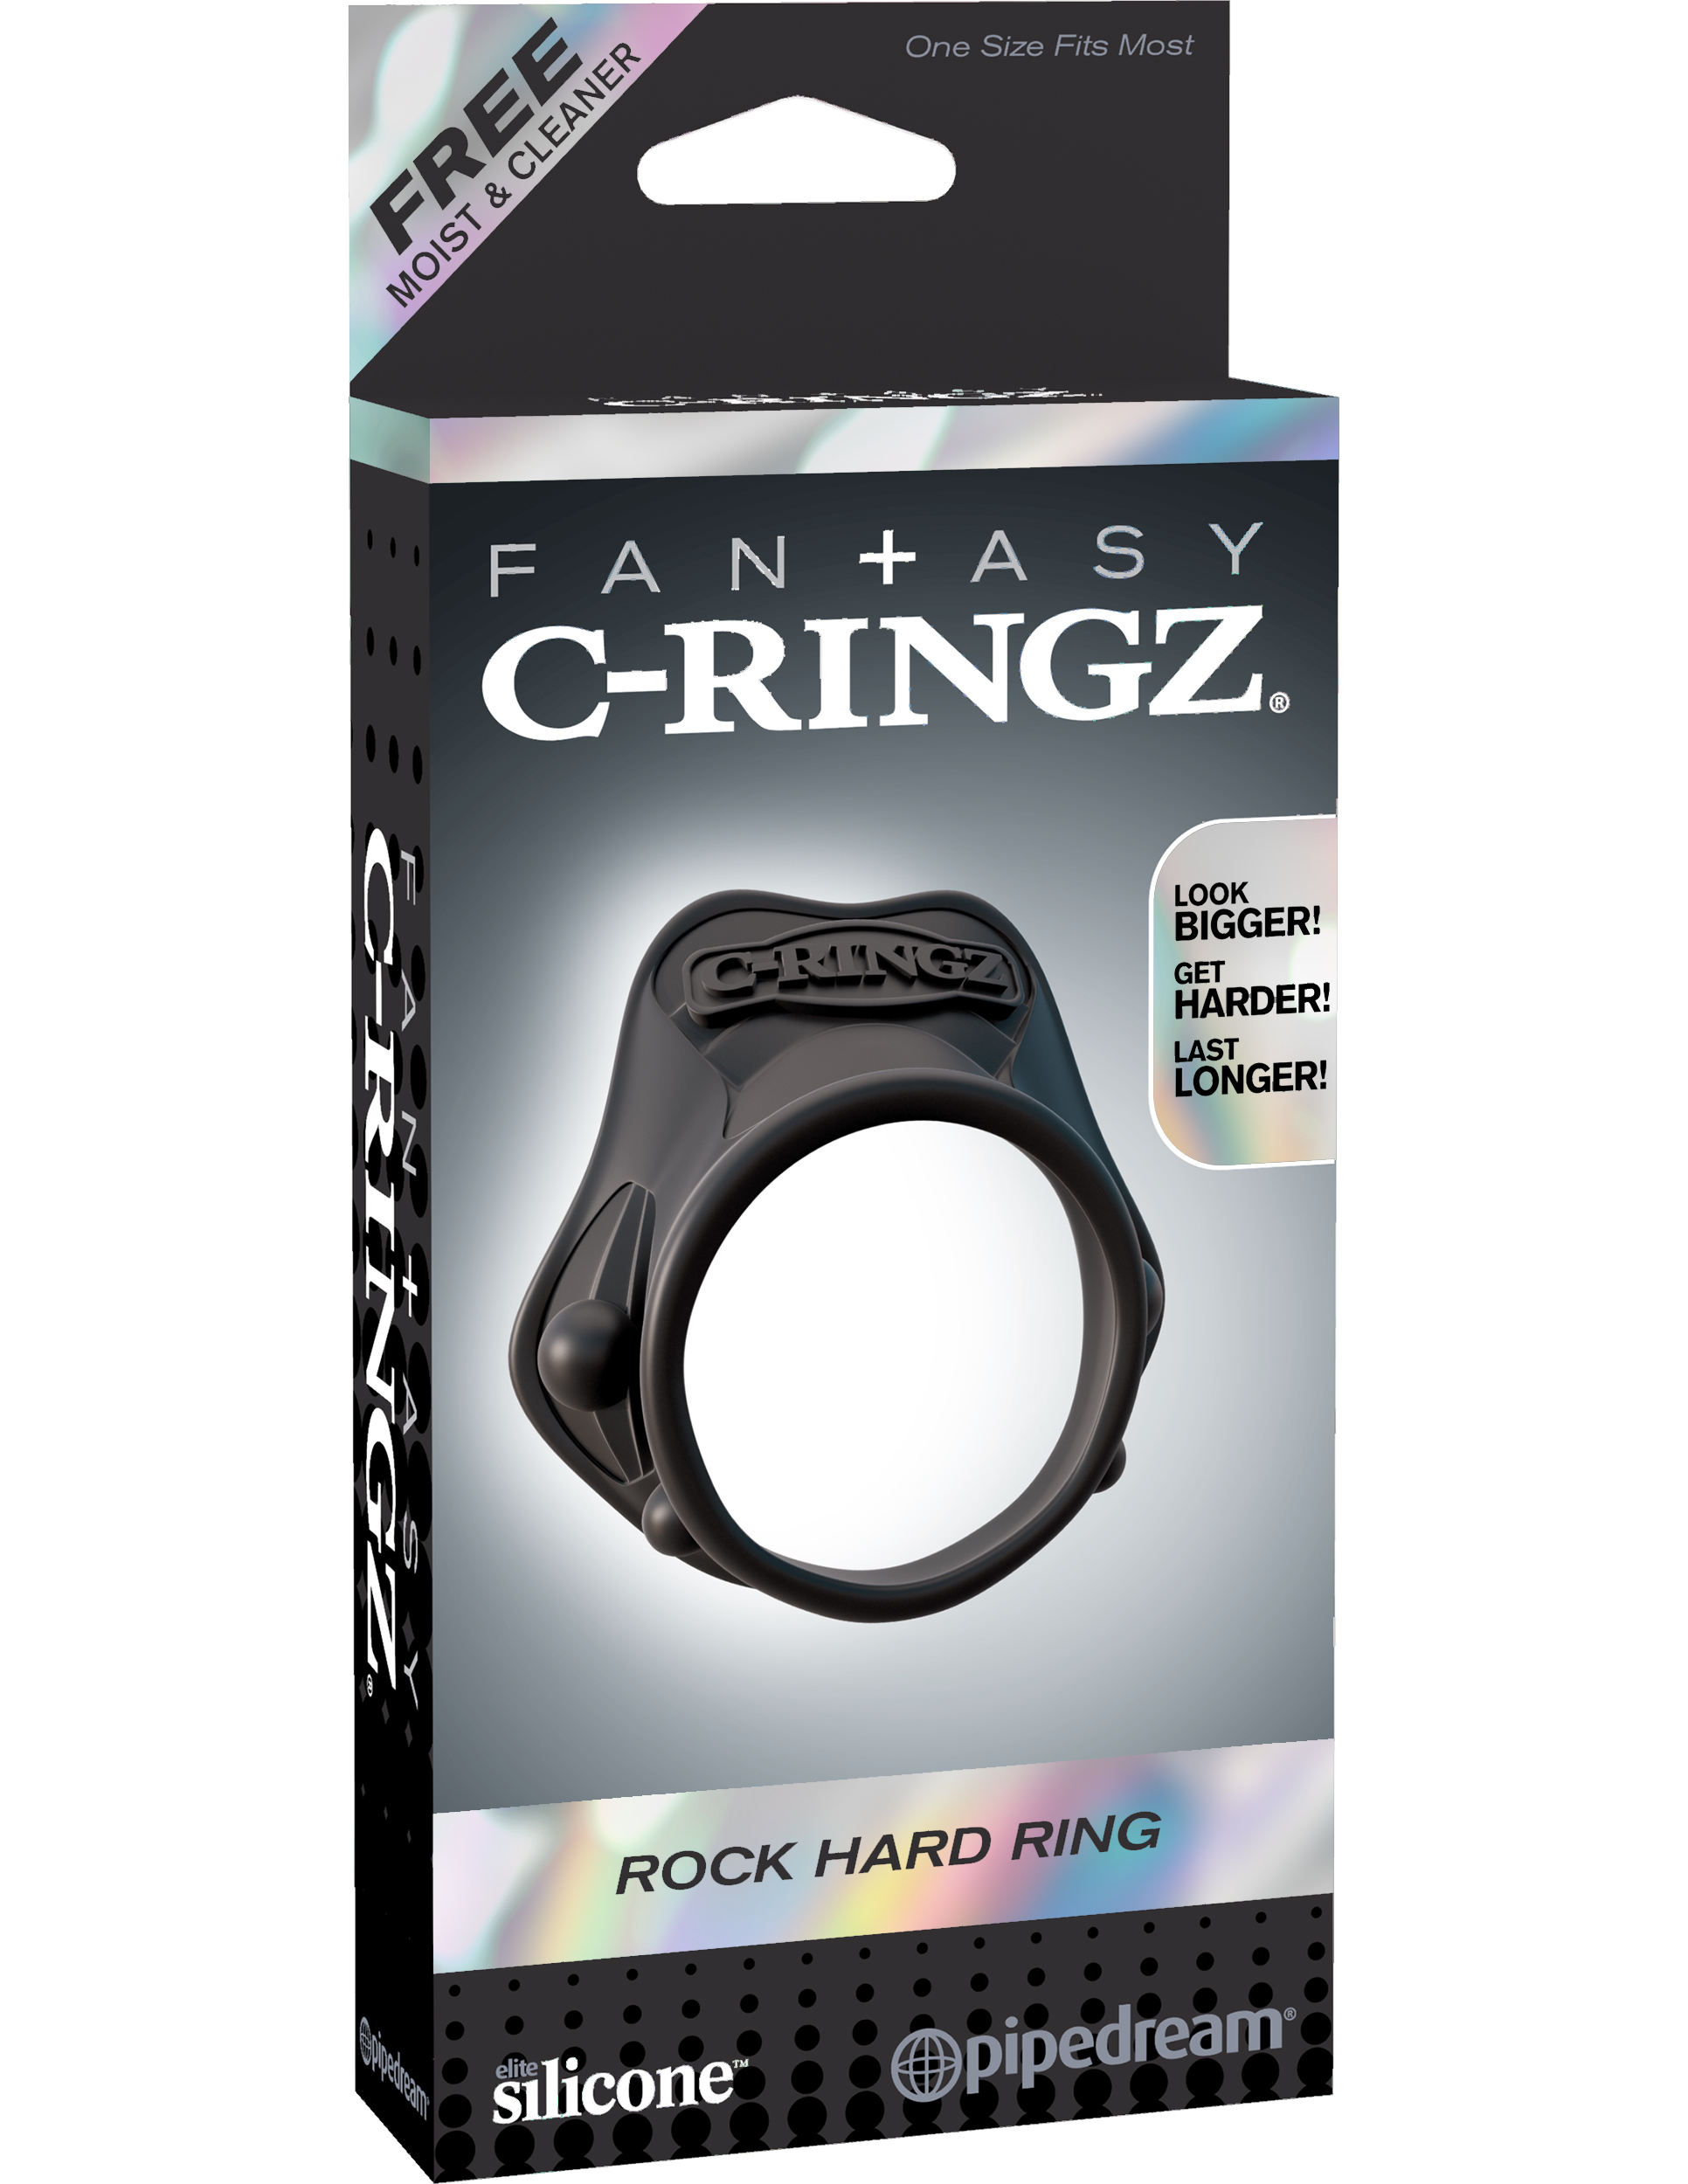 FANTASY C-RINGZ ROCK HARD RING STRETCHER